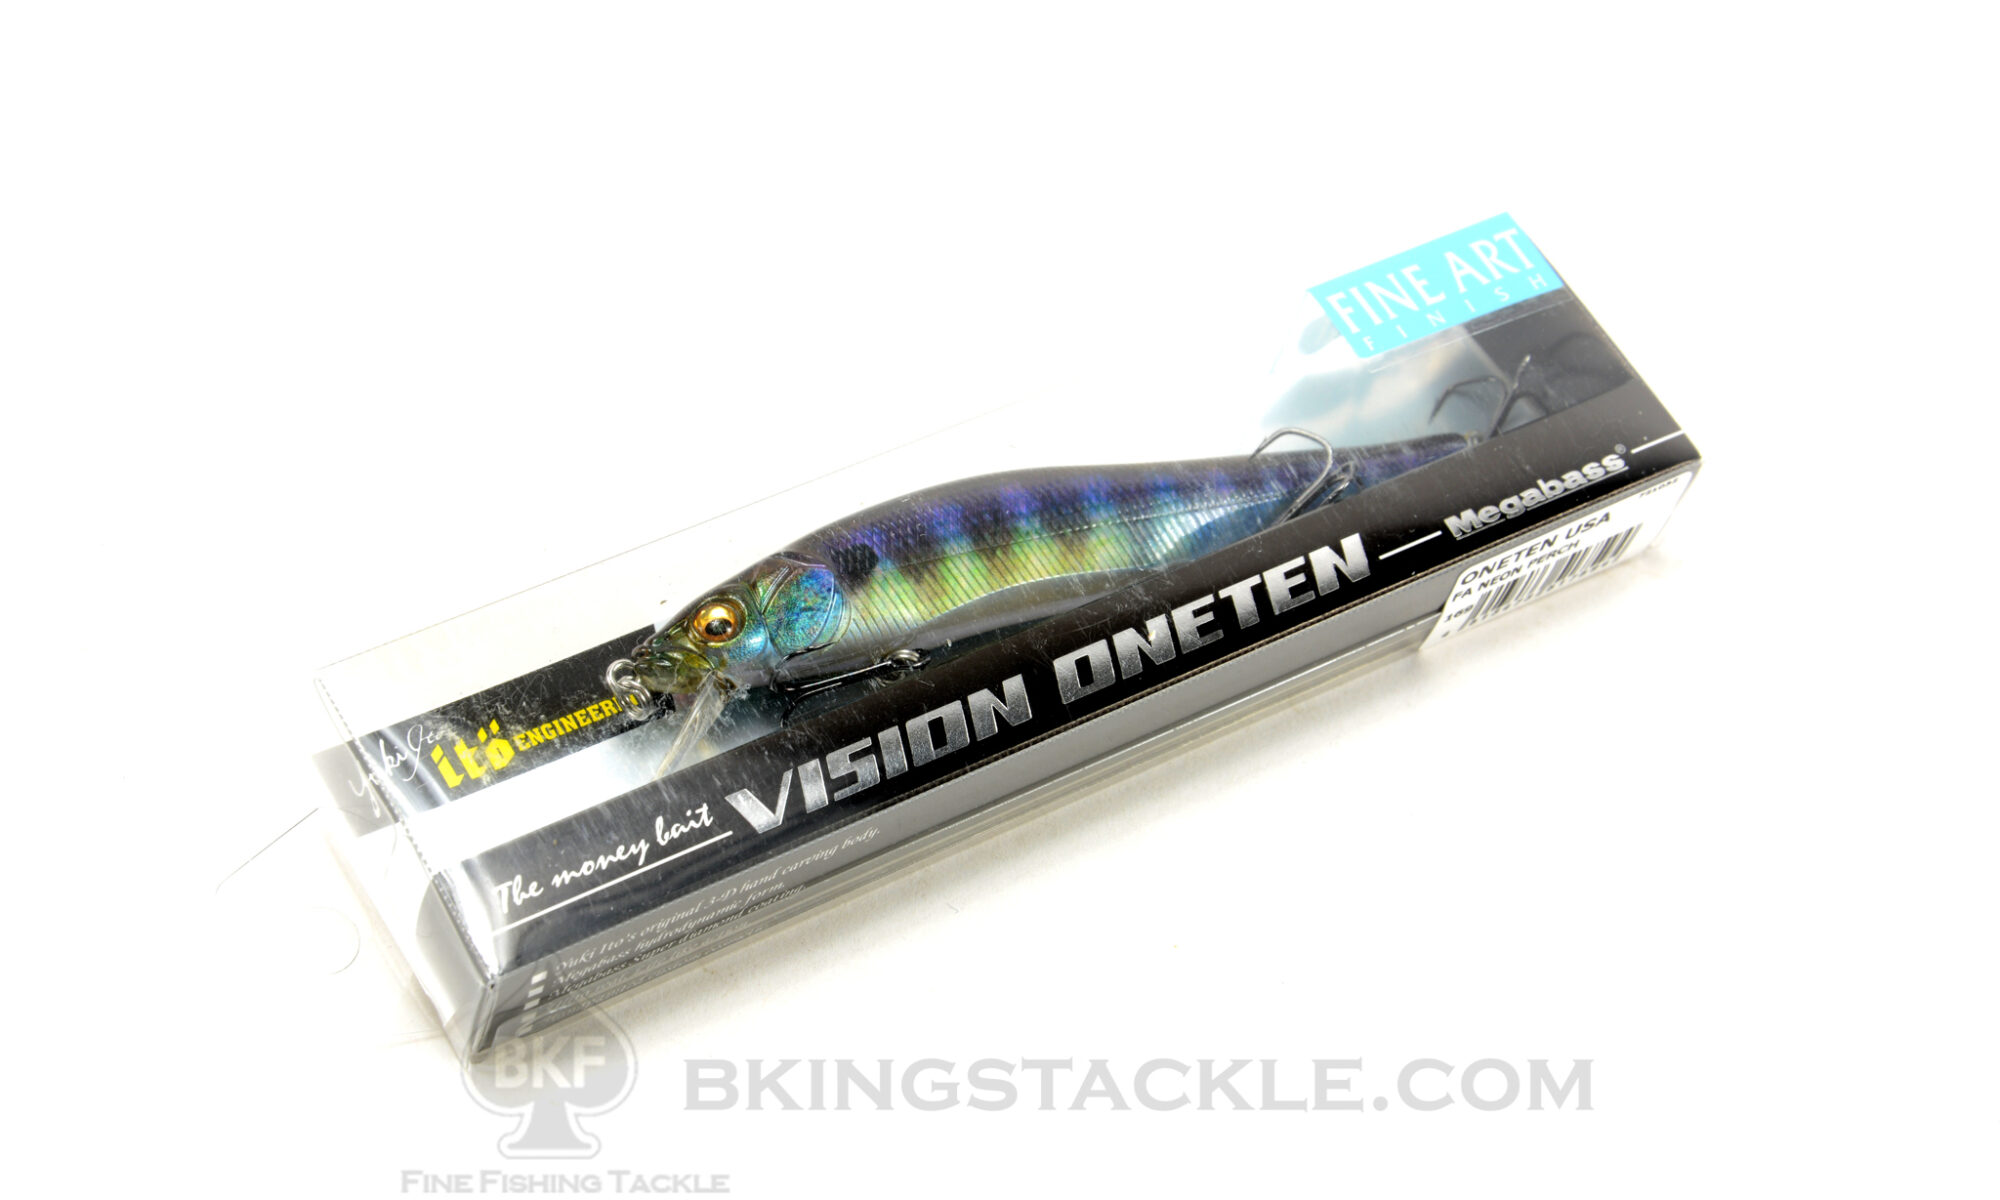 Megabass - VISION ONETEN - FA Neon Perch